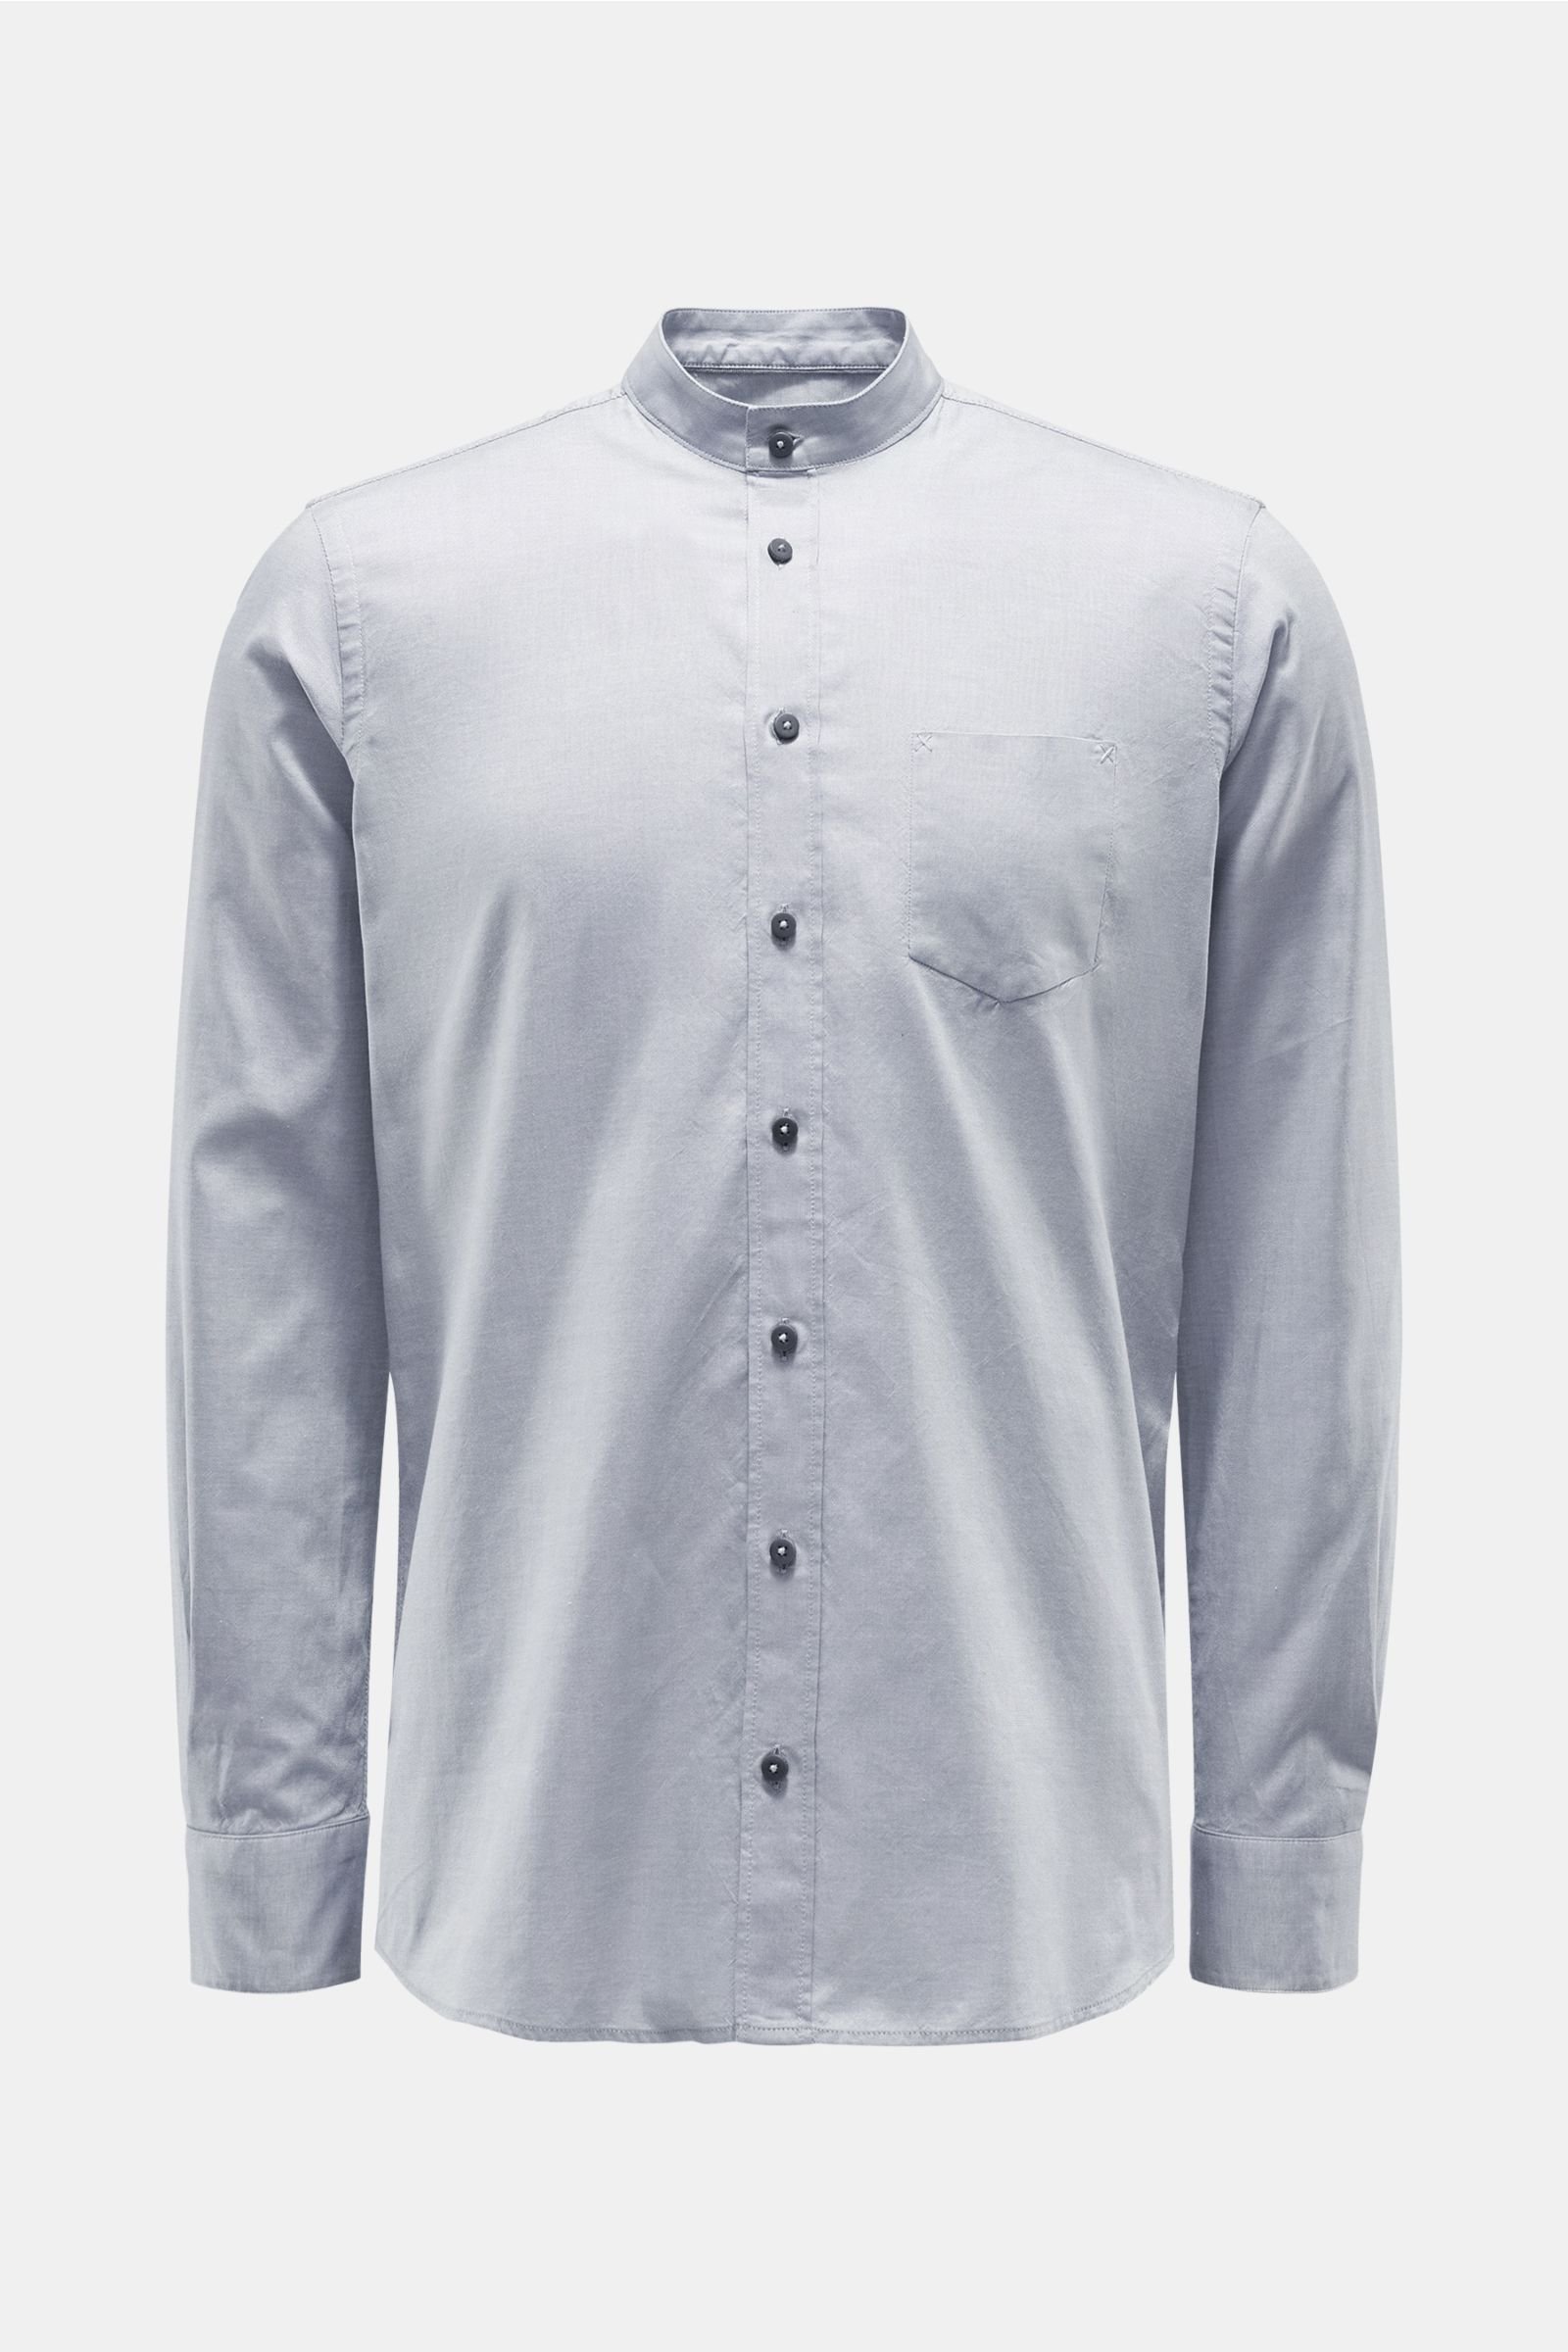 Oxford shirt grandad collar grey